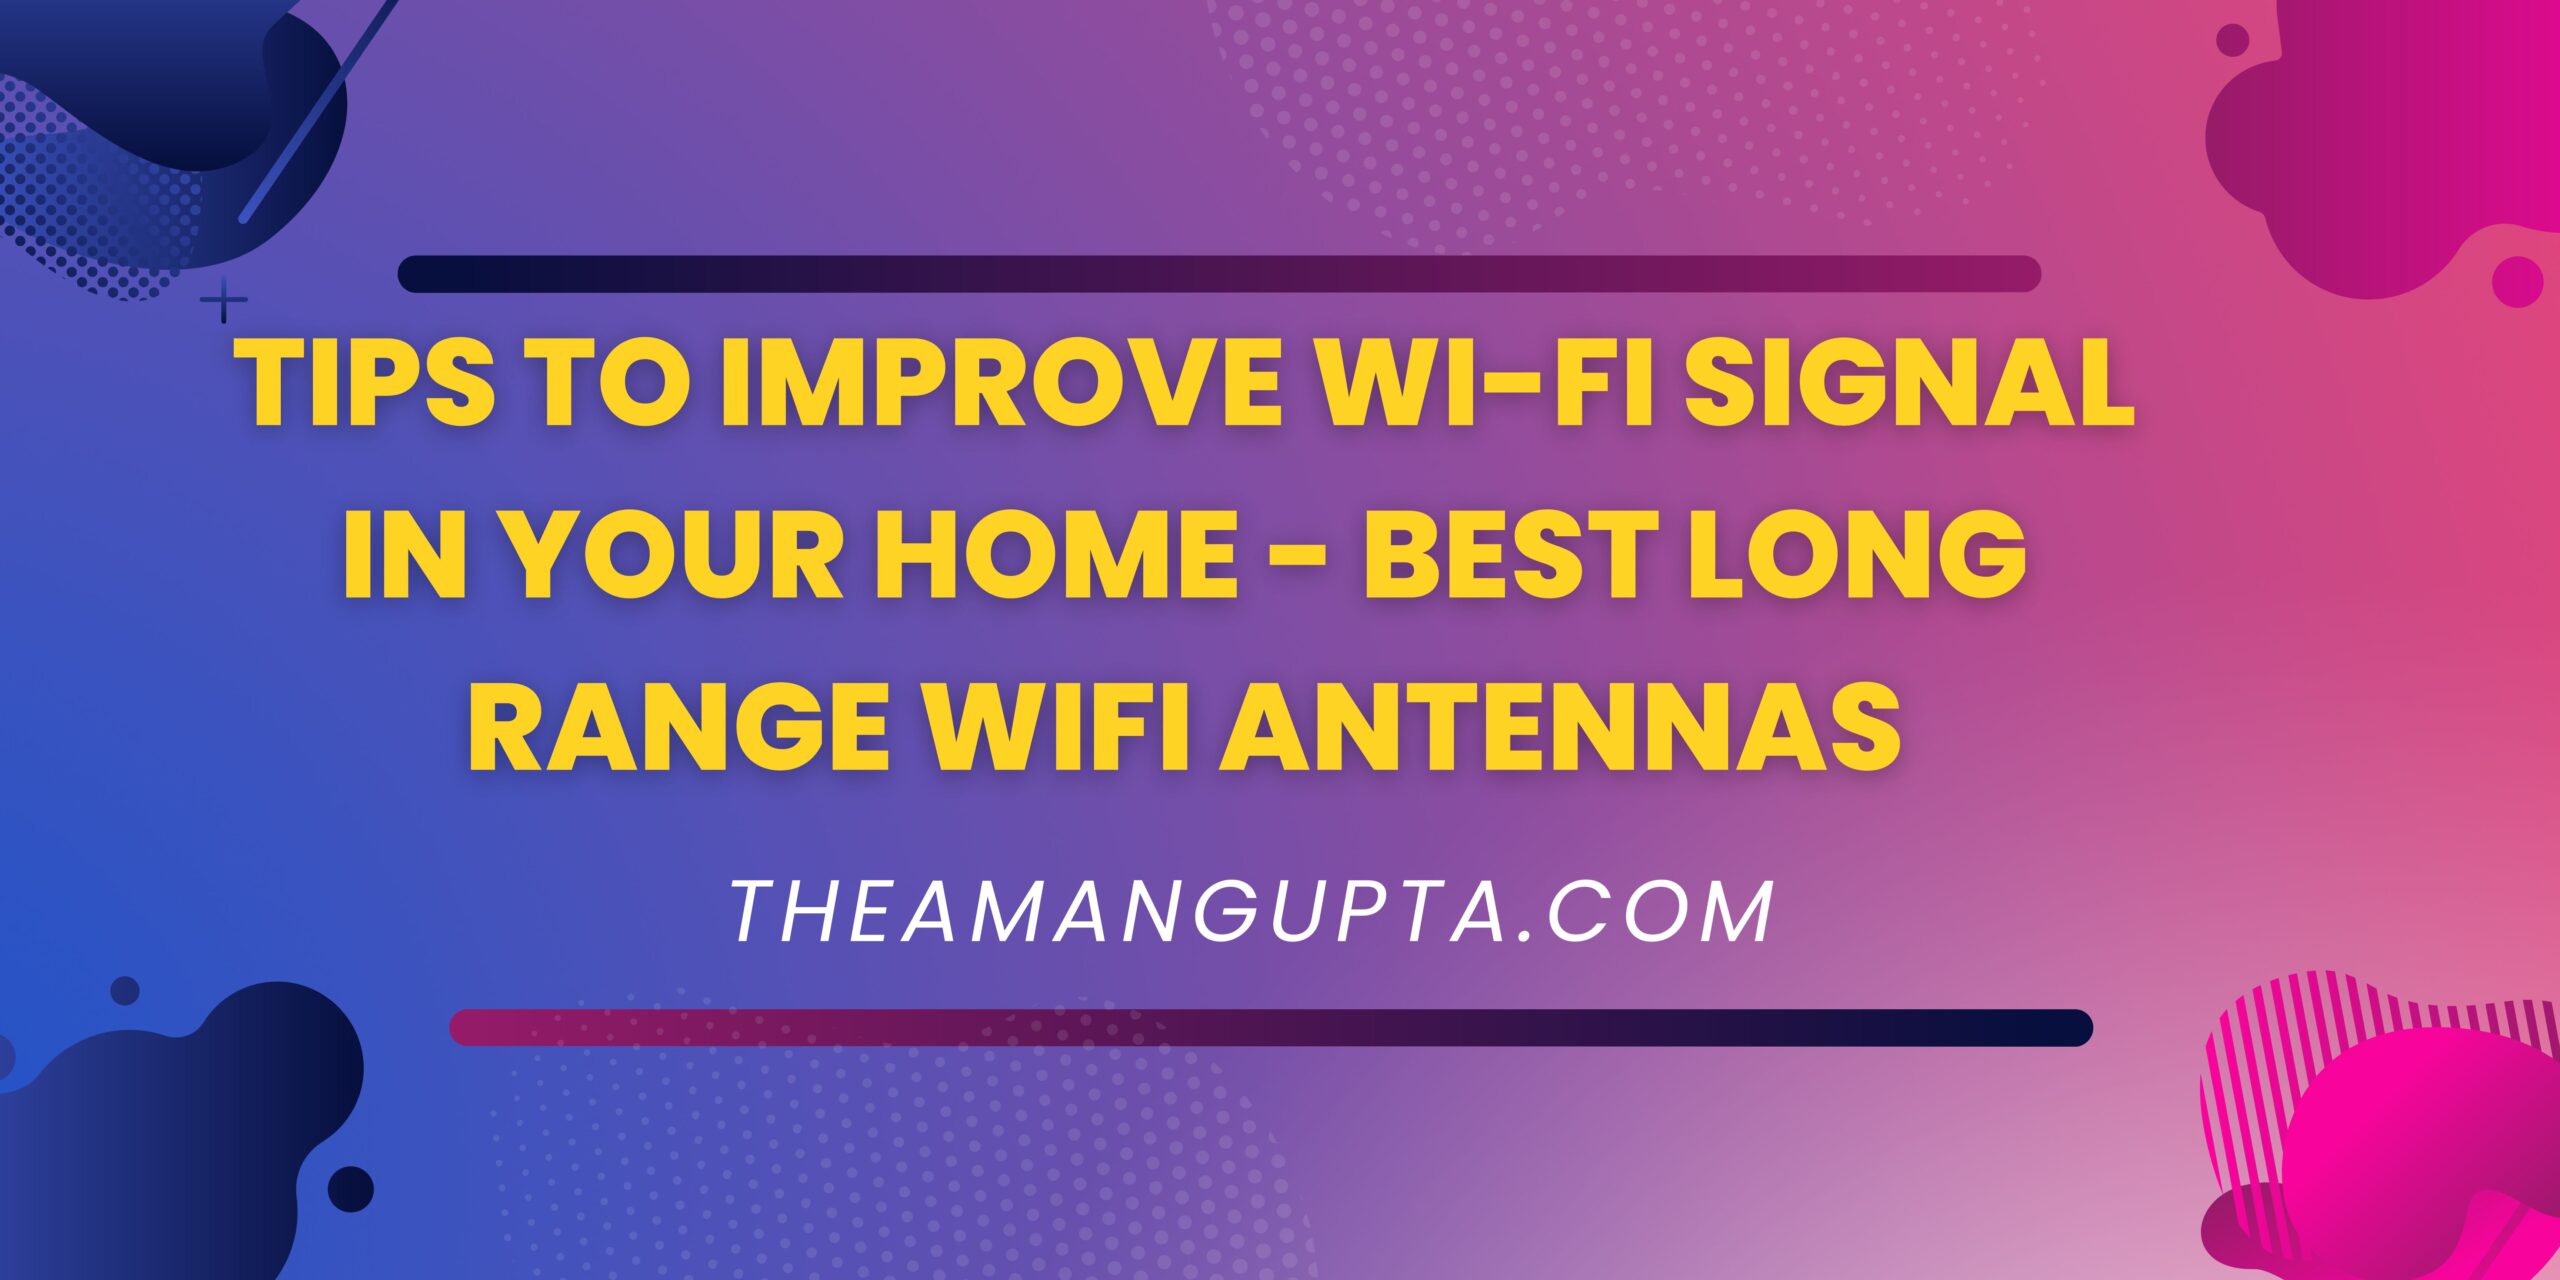 Tips To Improve Wi-Fi Signal In Your Home - Best Long Range WiFi Antennas|Improve WiFi Signal|Theamangupta|Theamangupta